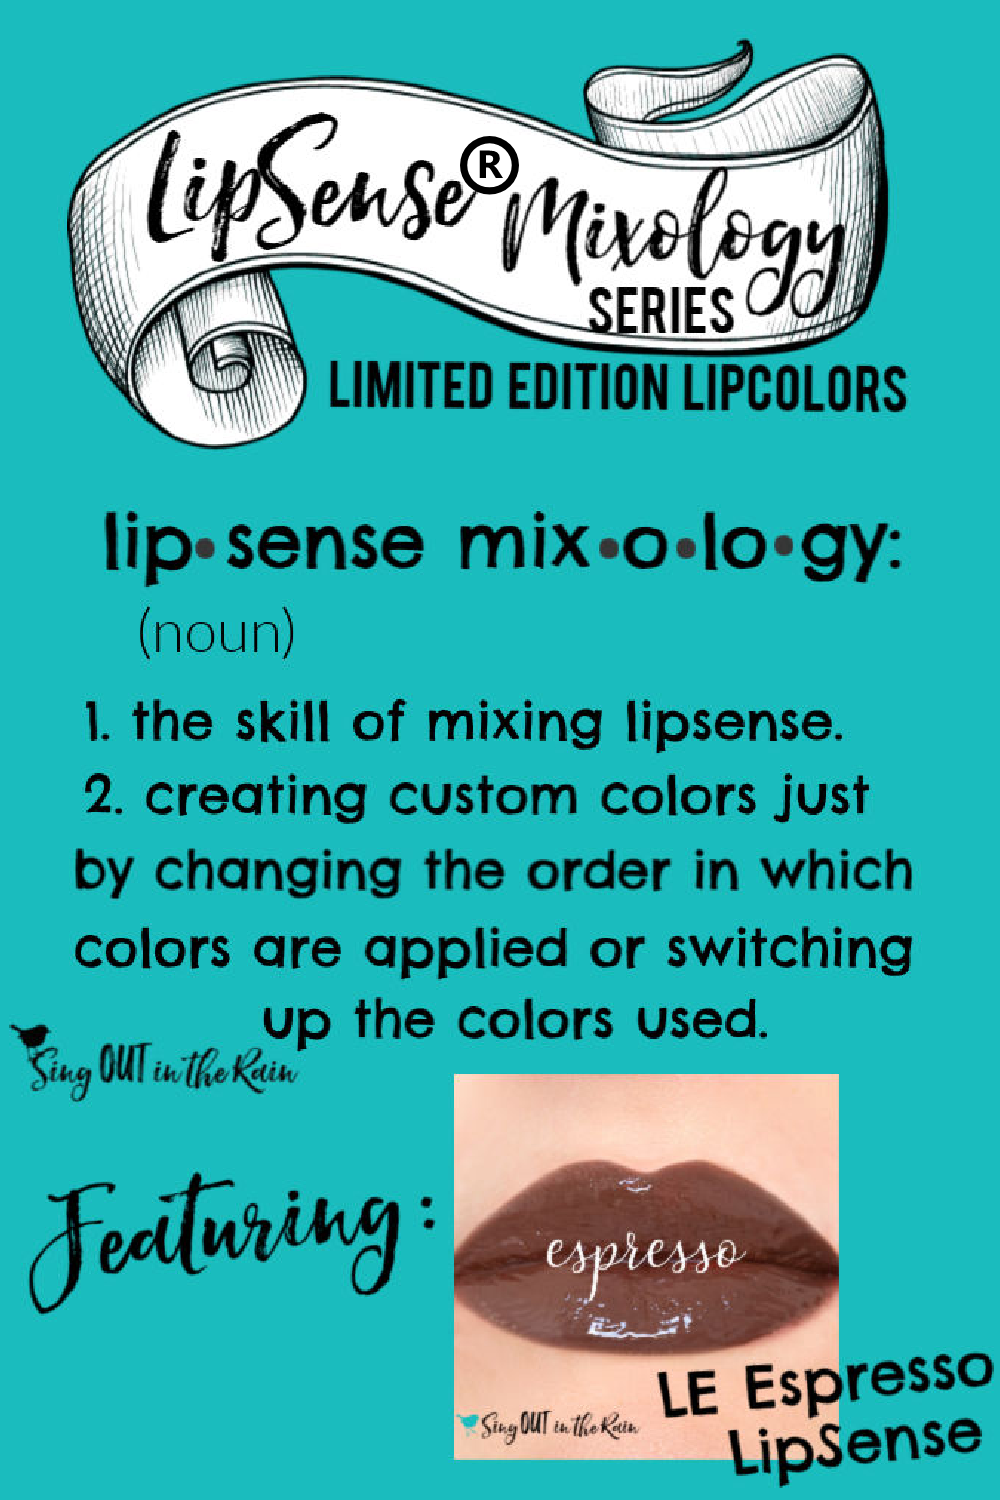 The Ultimate Guide to Espresso LipSense Mixology